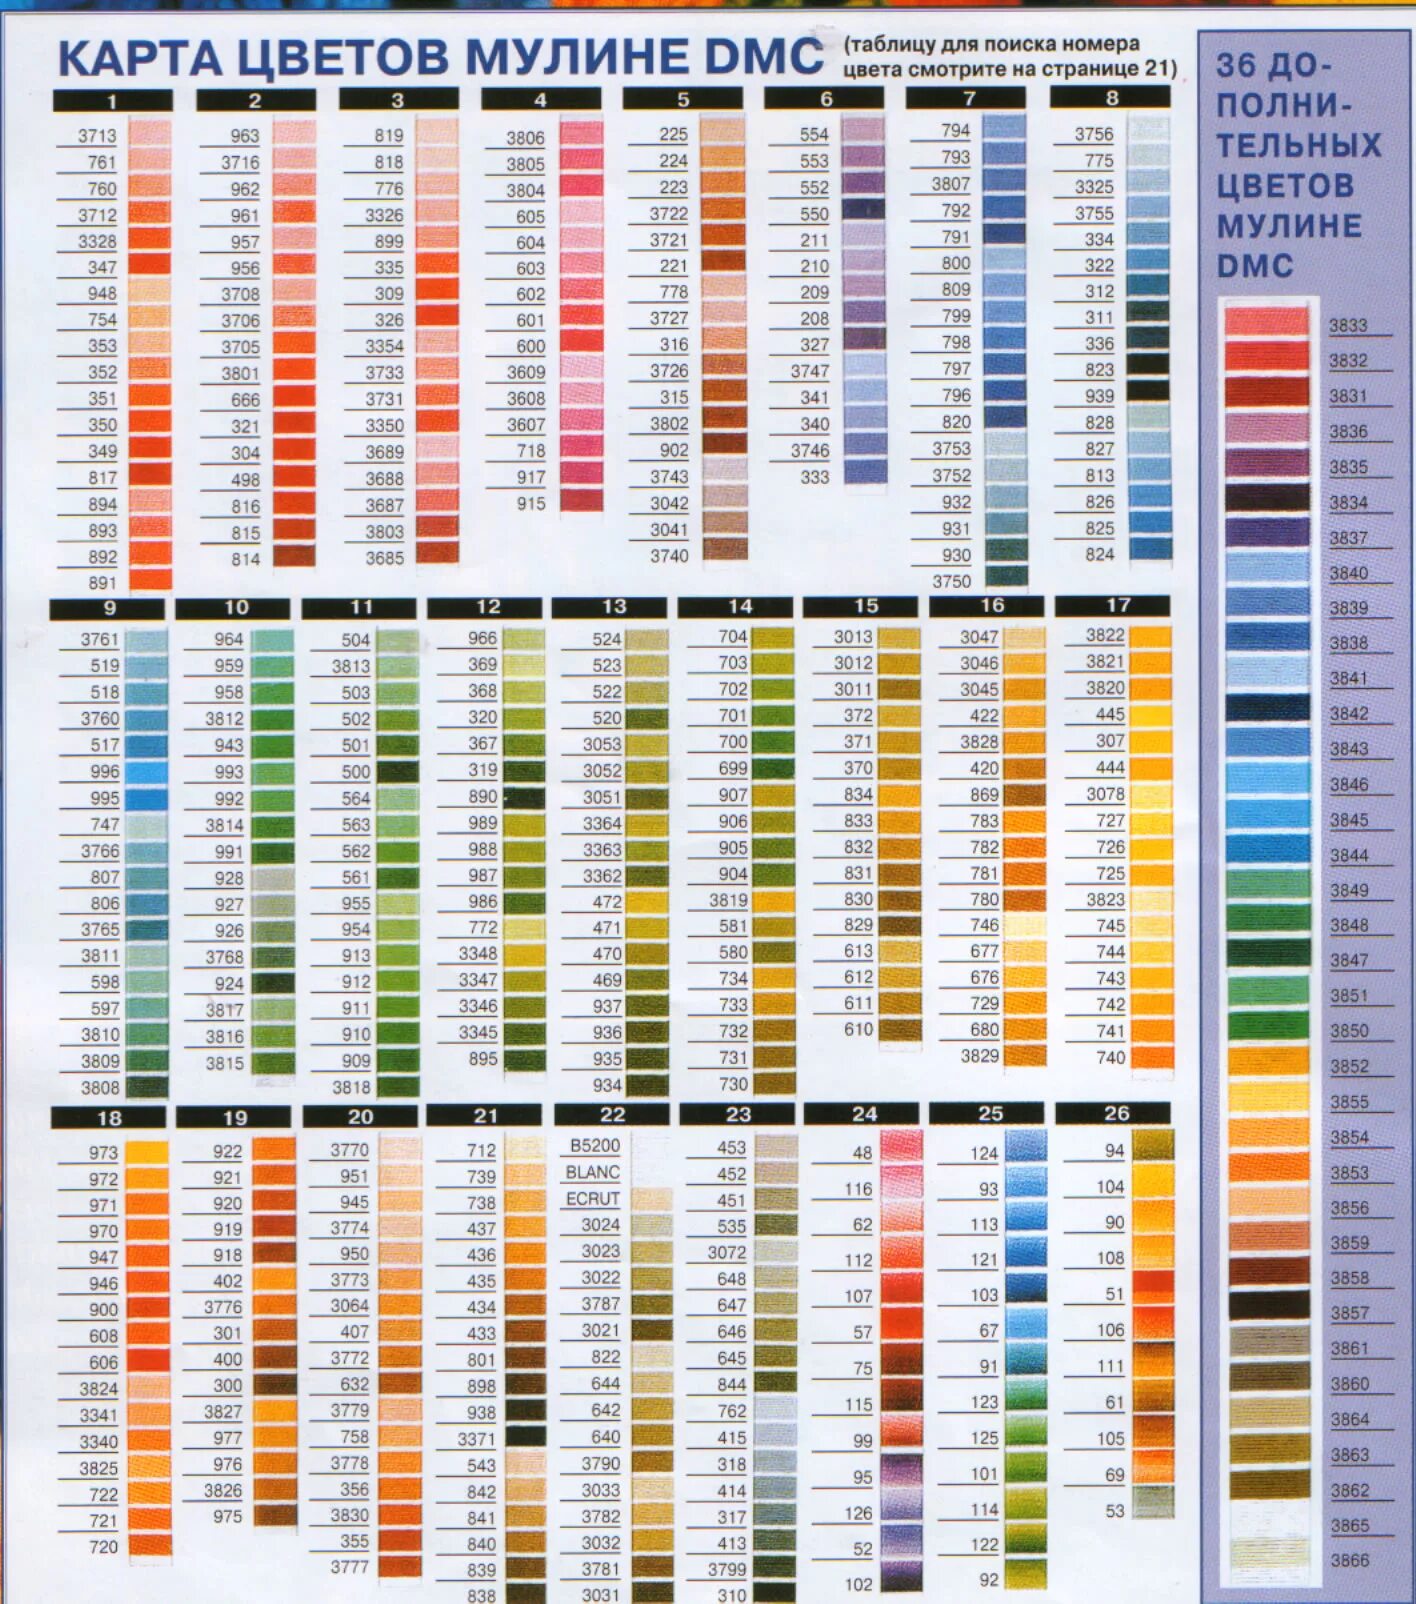 Таблица цветов ниток мулине СХС. Цветовая палитра мулине ДМС. Нитки мулине ДМС таблица. Нитки мулине DMC таблица цветов. Номера dmc